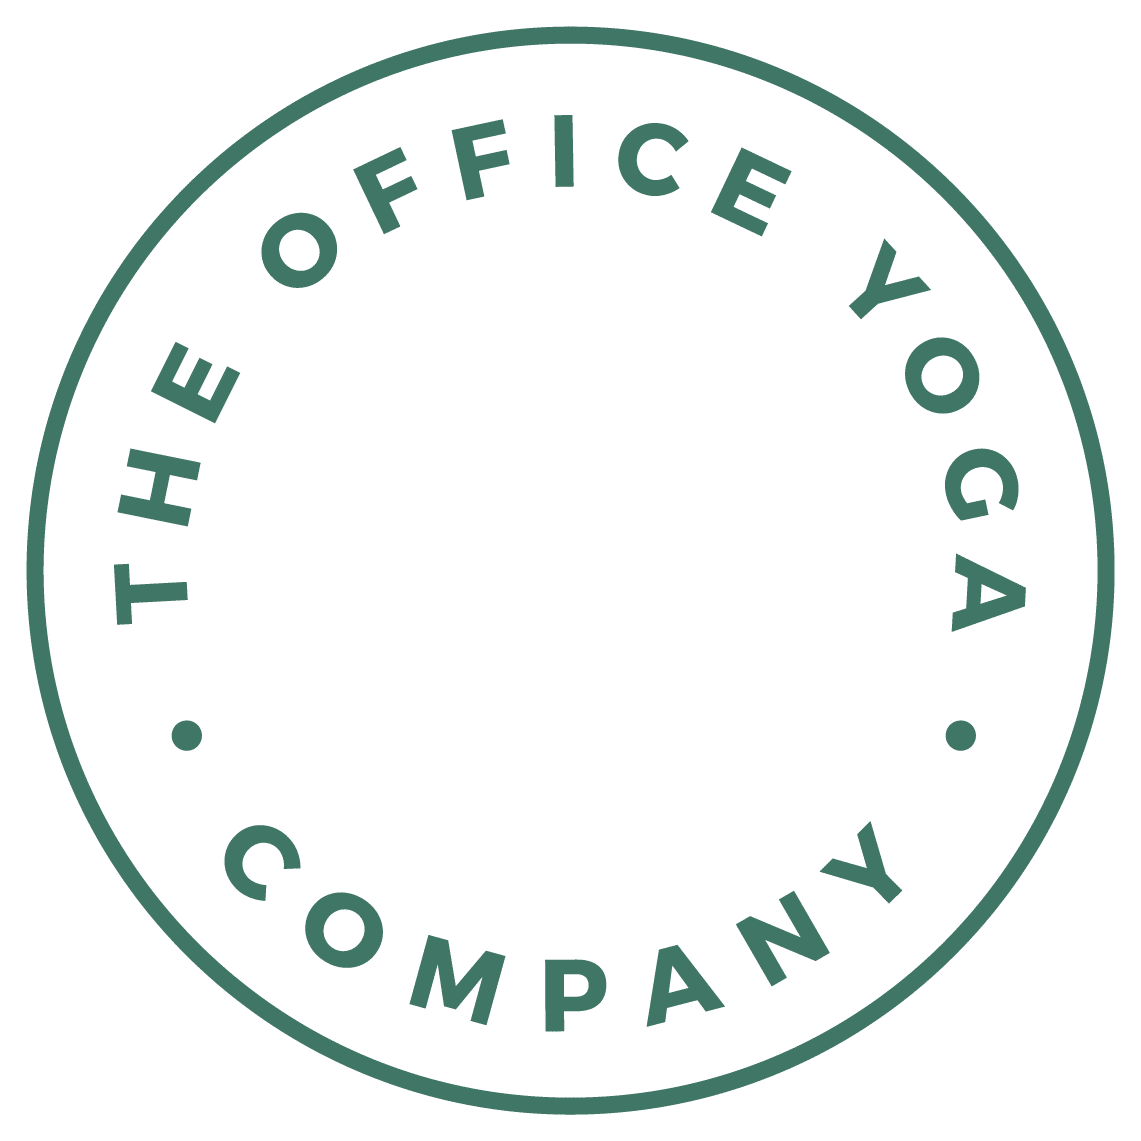 The Office Yoga Company